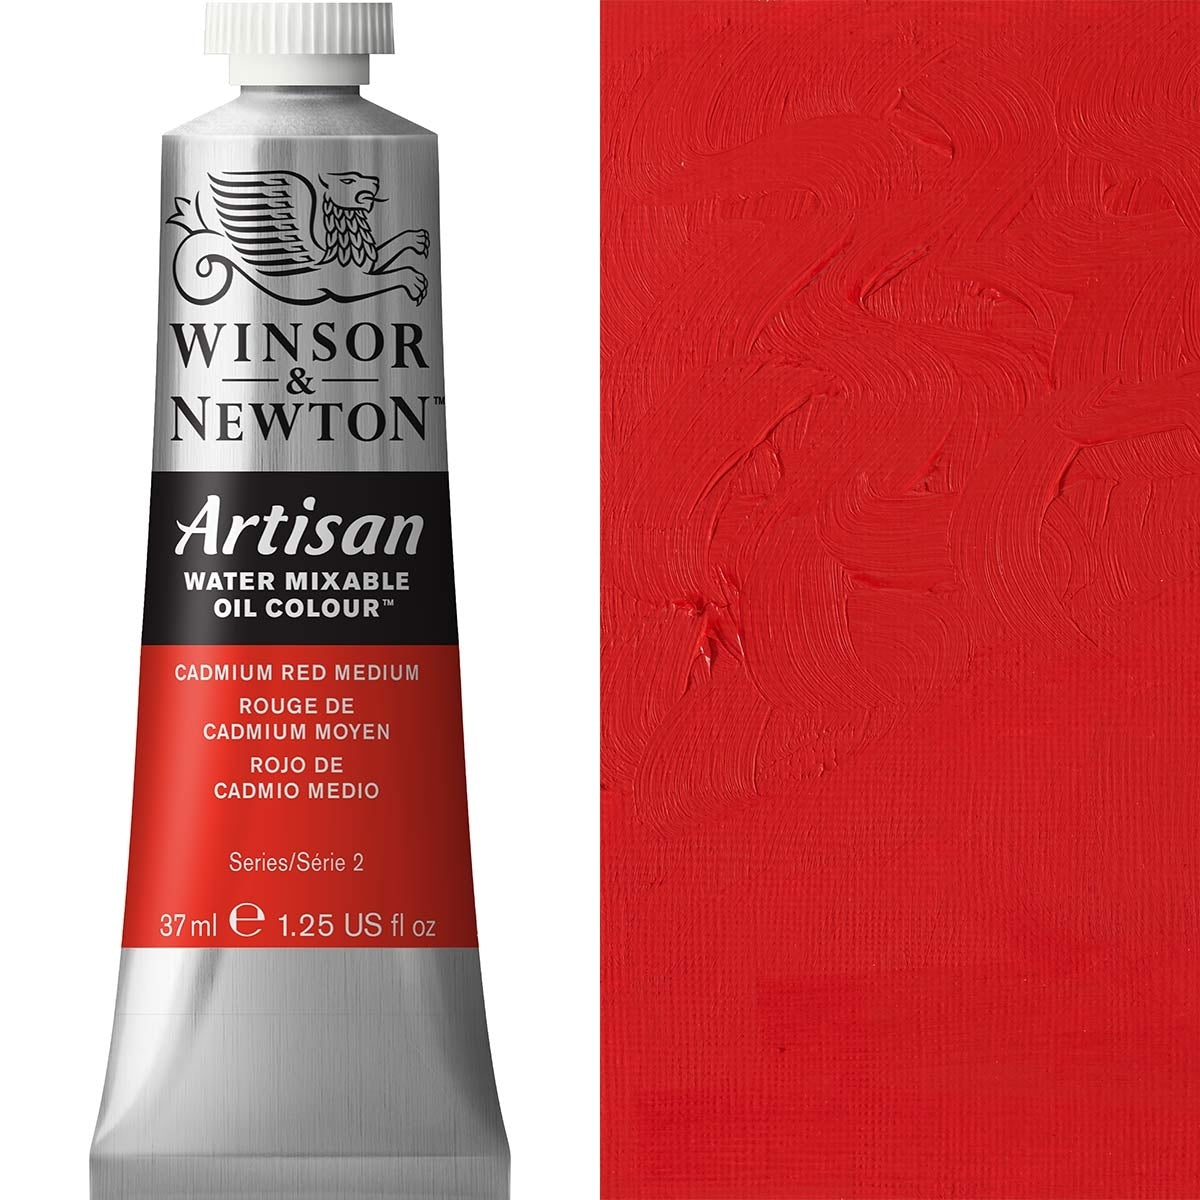 Winsor and Newton - Artisan Oil Colour Watermixable - 37ml - Cadmium Red Medium